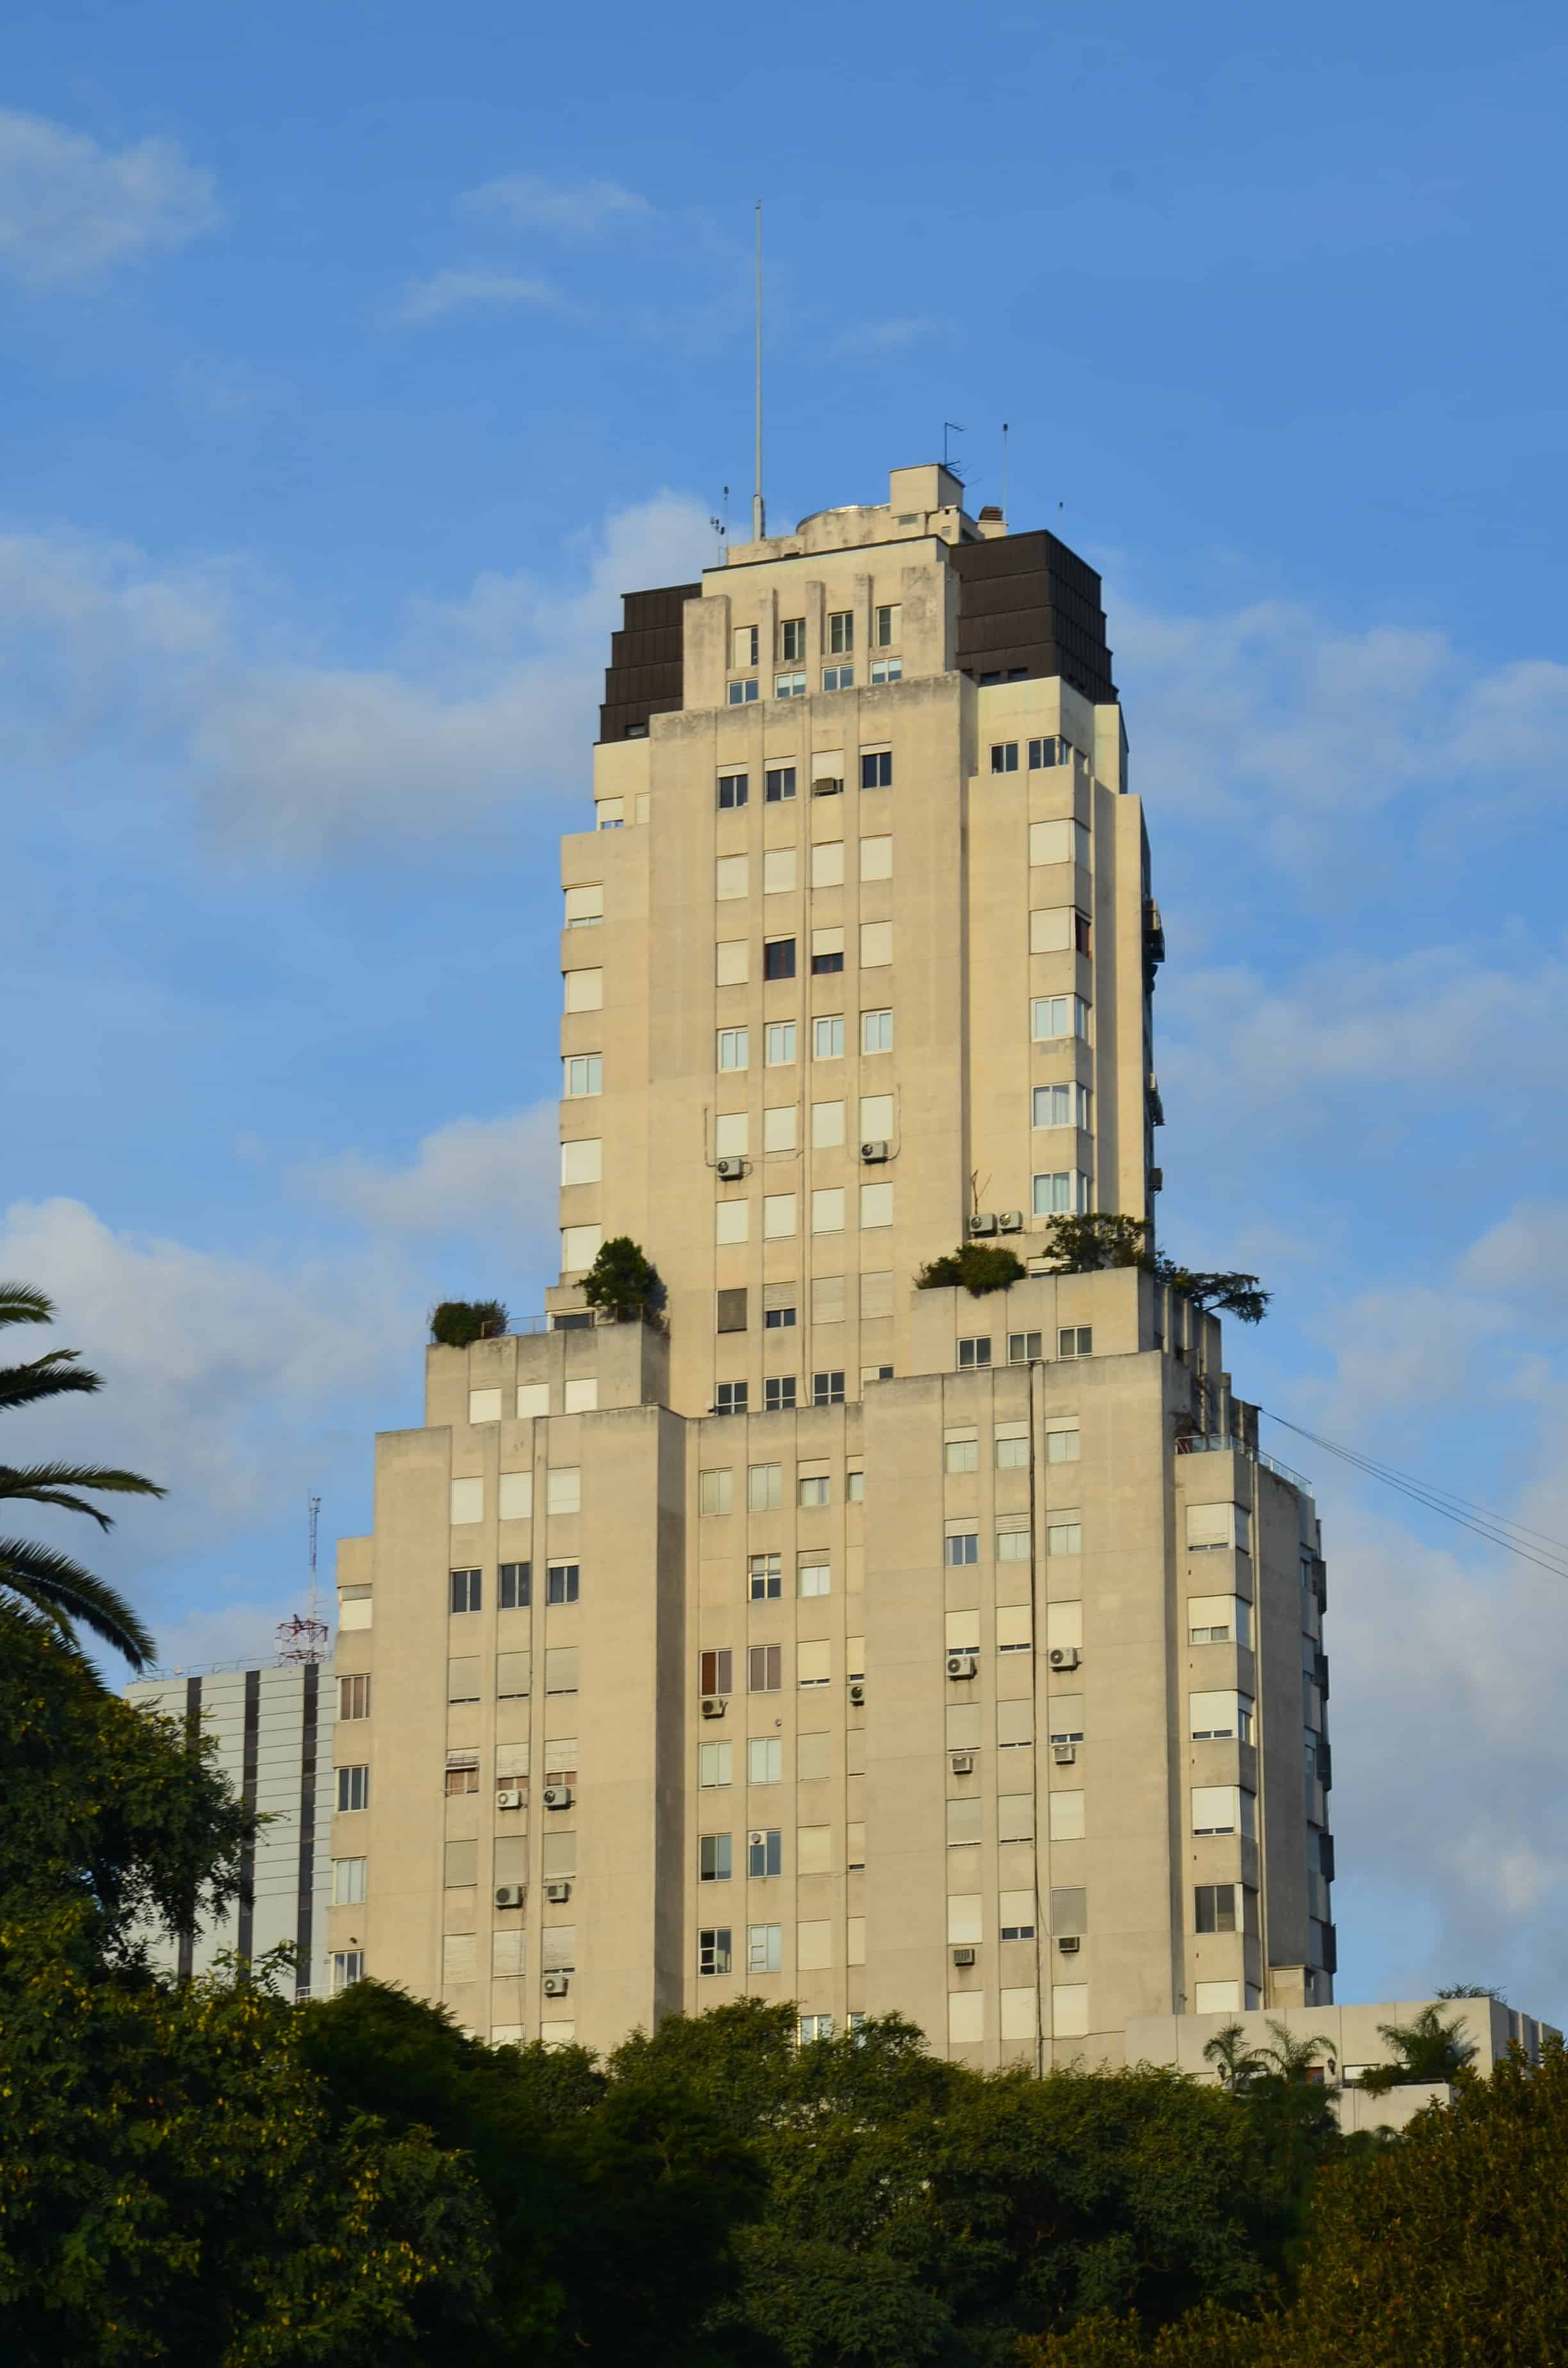 Edificio Kavanagh in Retiro, Buenos Aires, Argentina